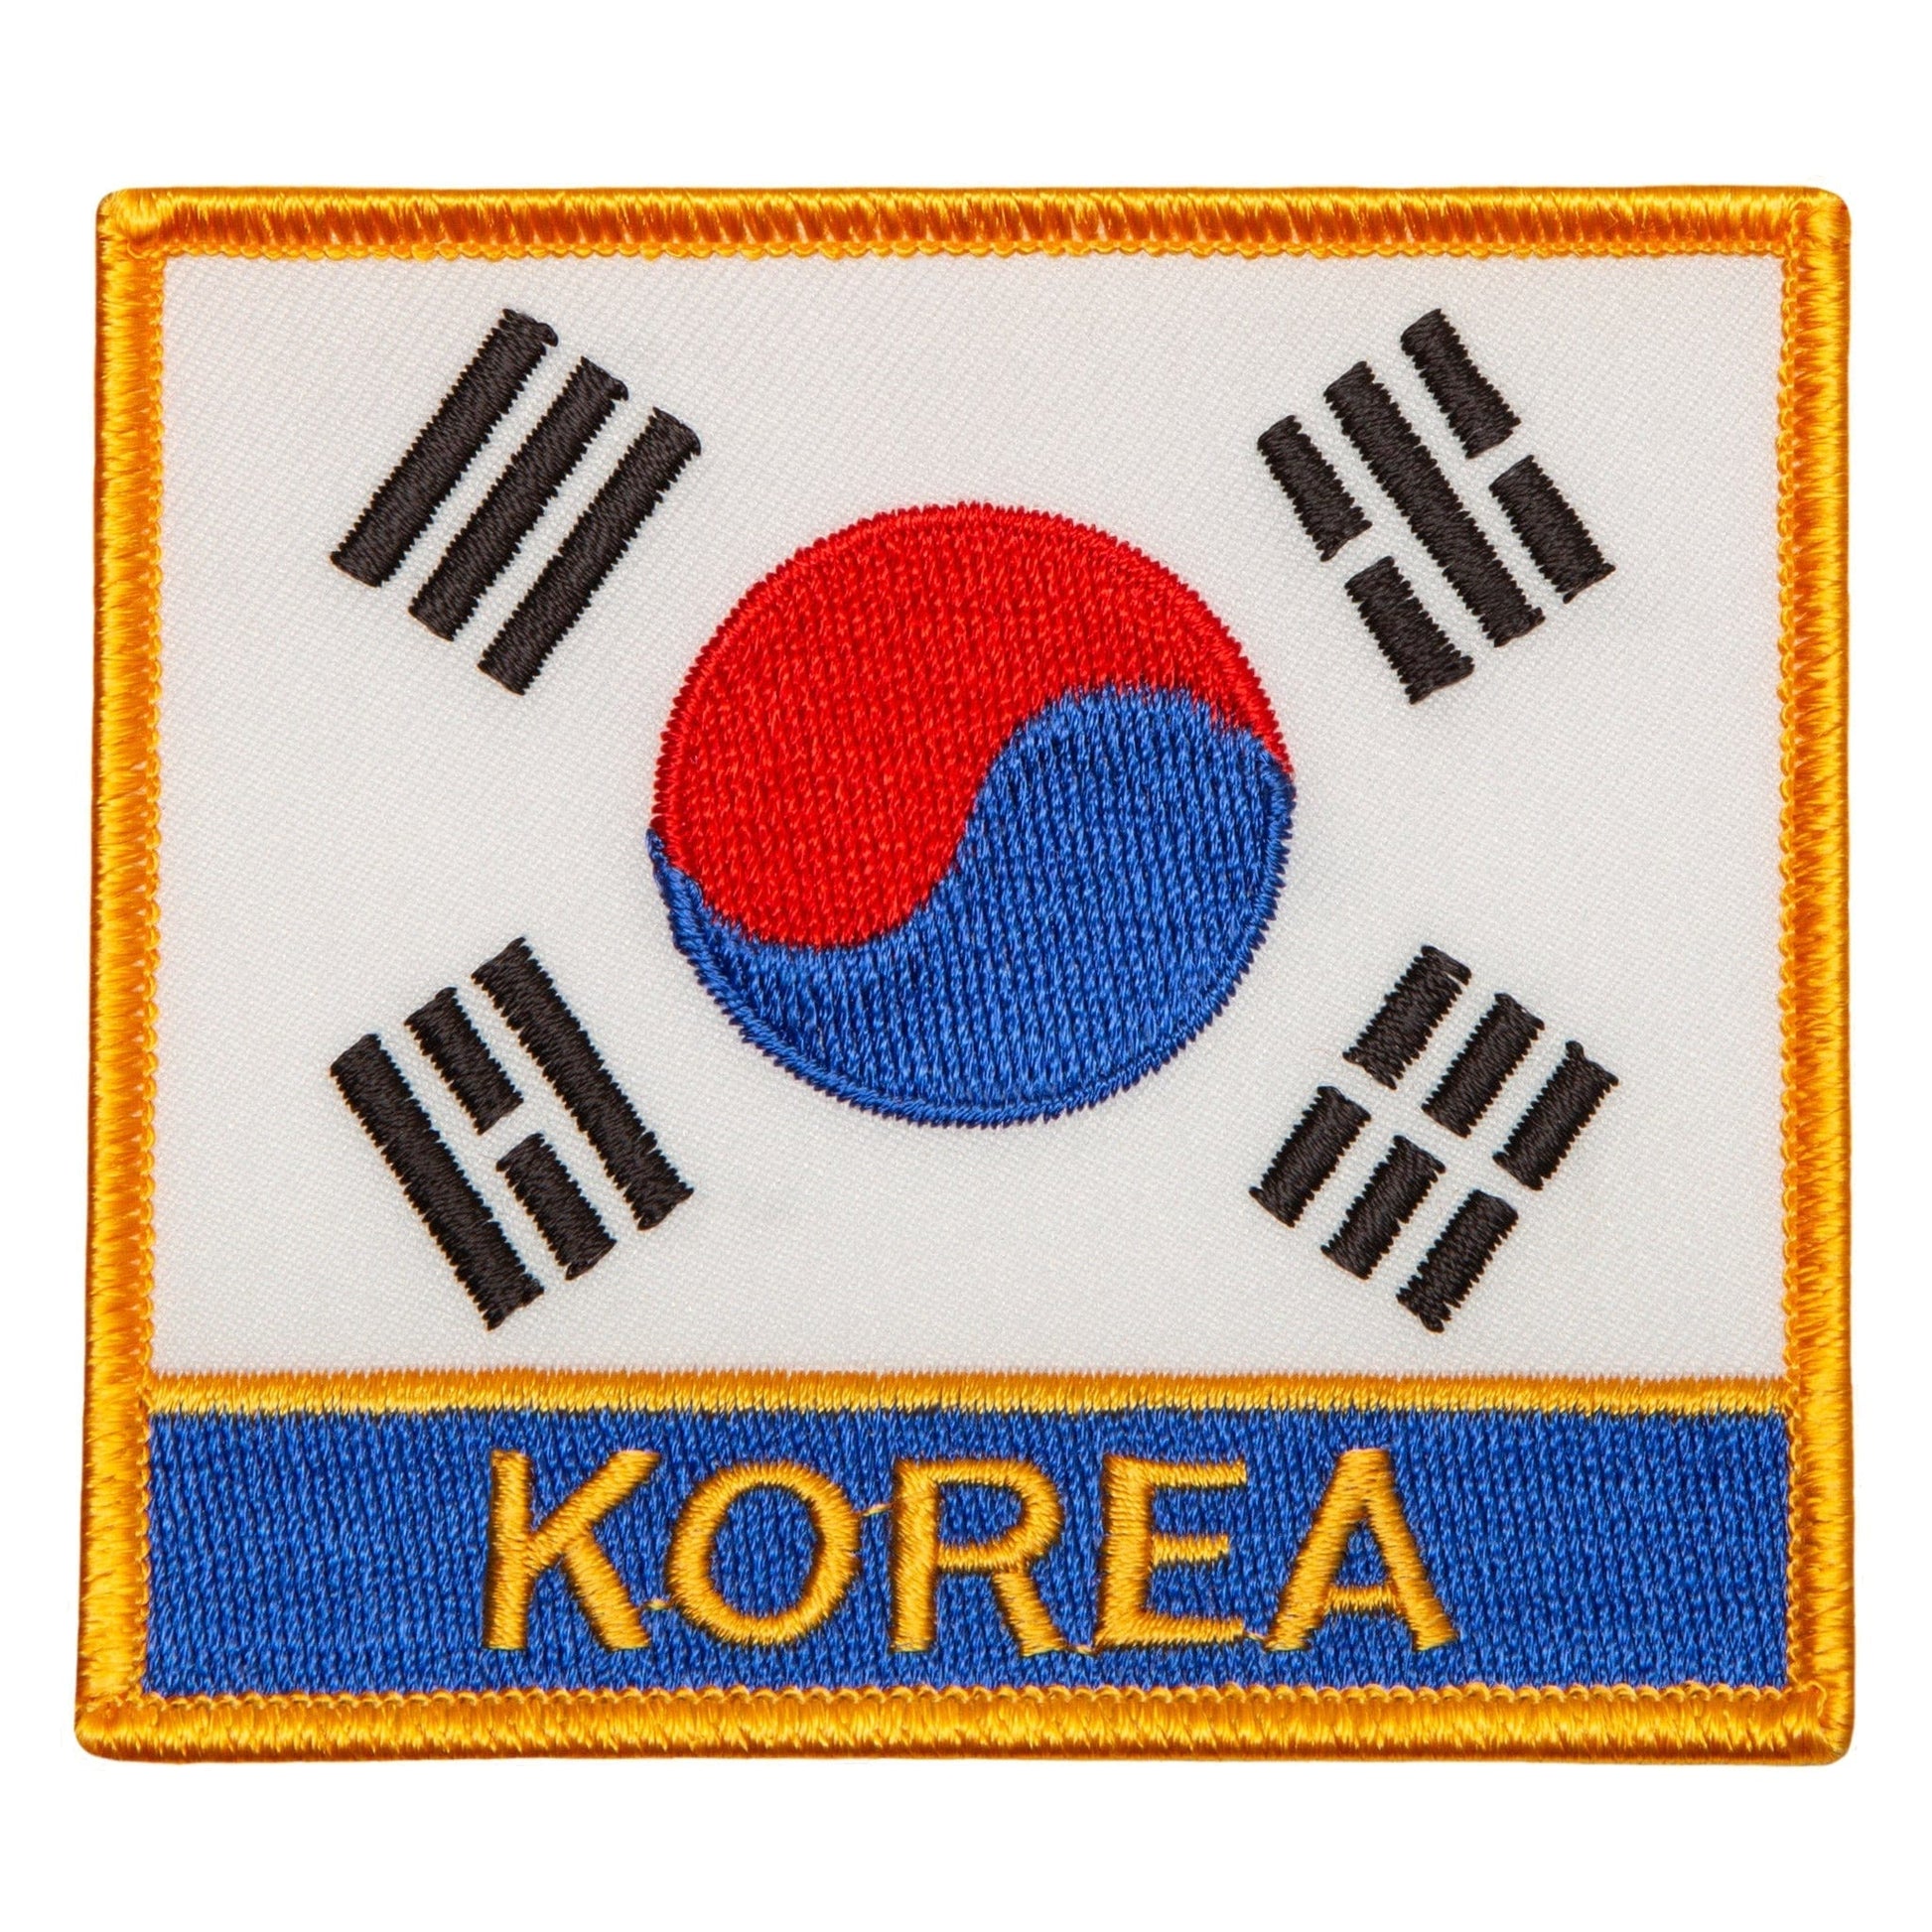 EclipseMartialArtsSupplies sporting goods Korea Flag/Korea Patch Taekwondo martial arts